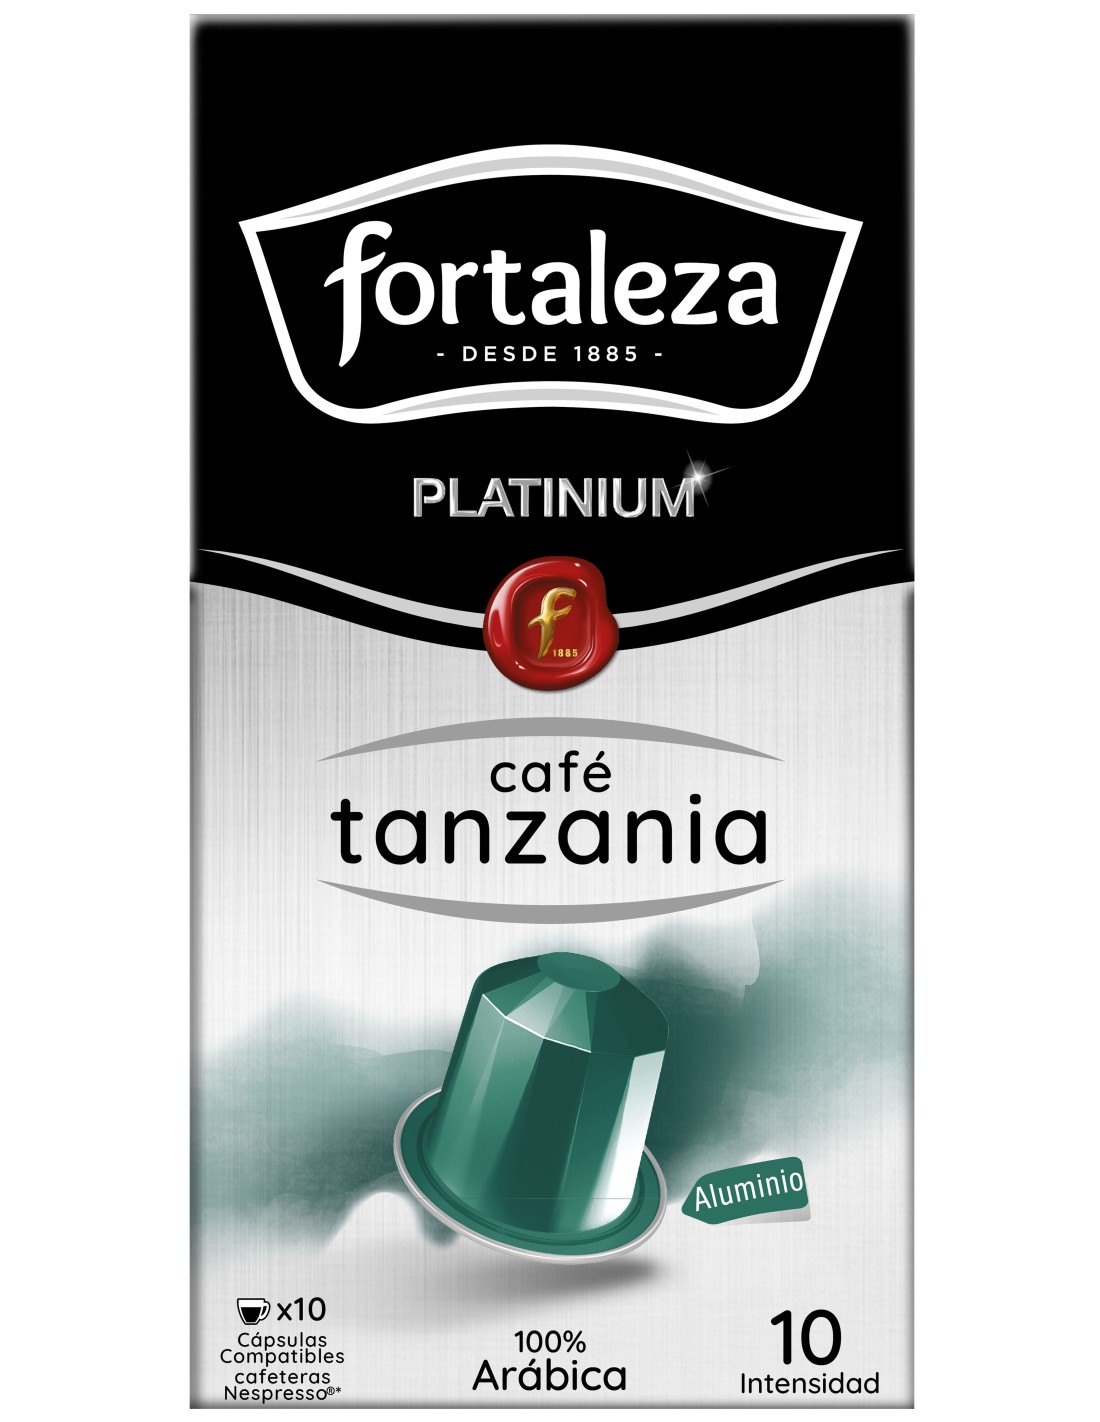 https://www.cafefortaleza.com/4672-thickbox_default/cafe-tanzania-10-capsulas-fortaleza-platinium-compatibles-con-nespresso.jpg